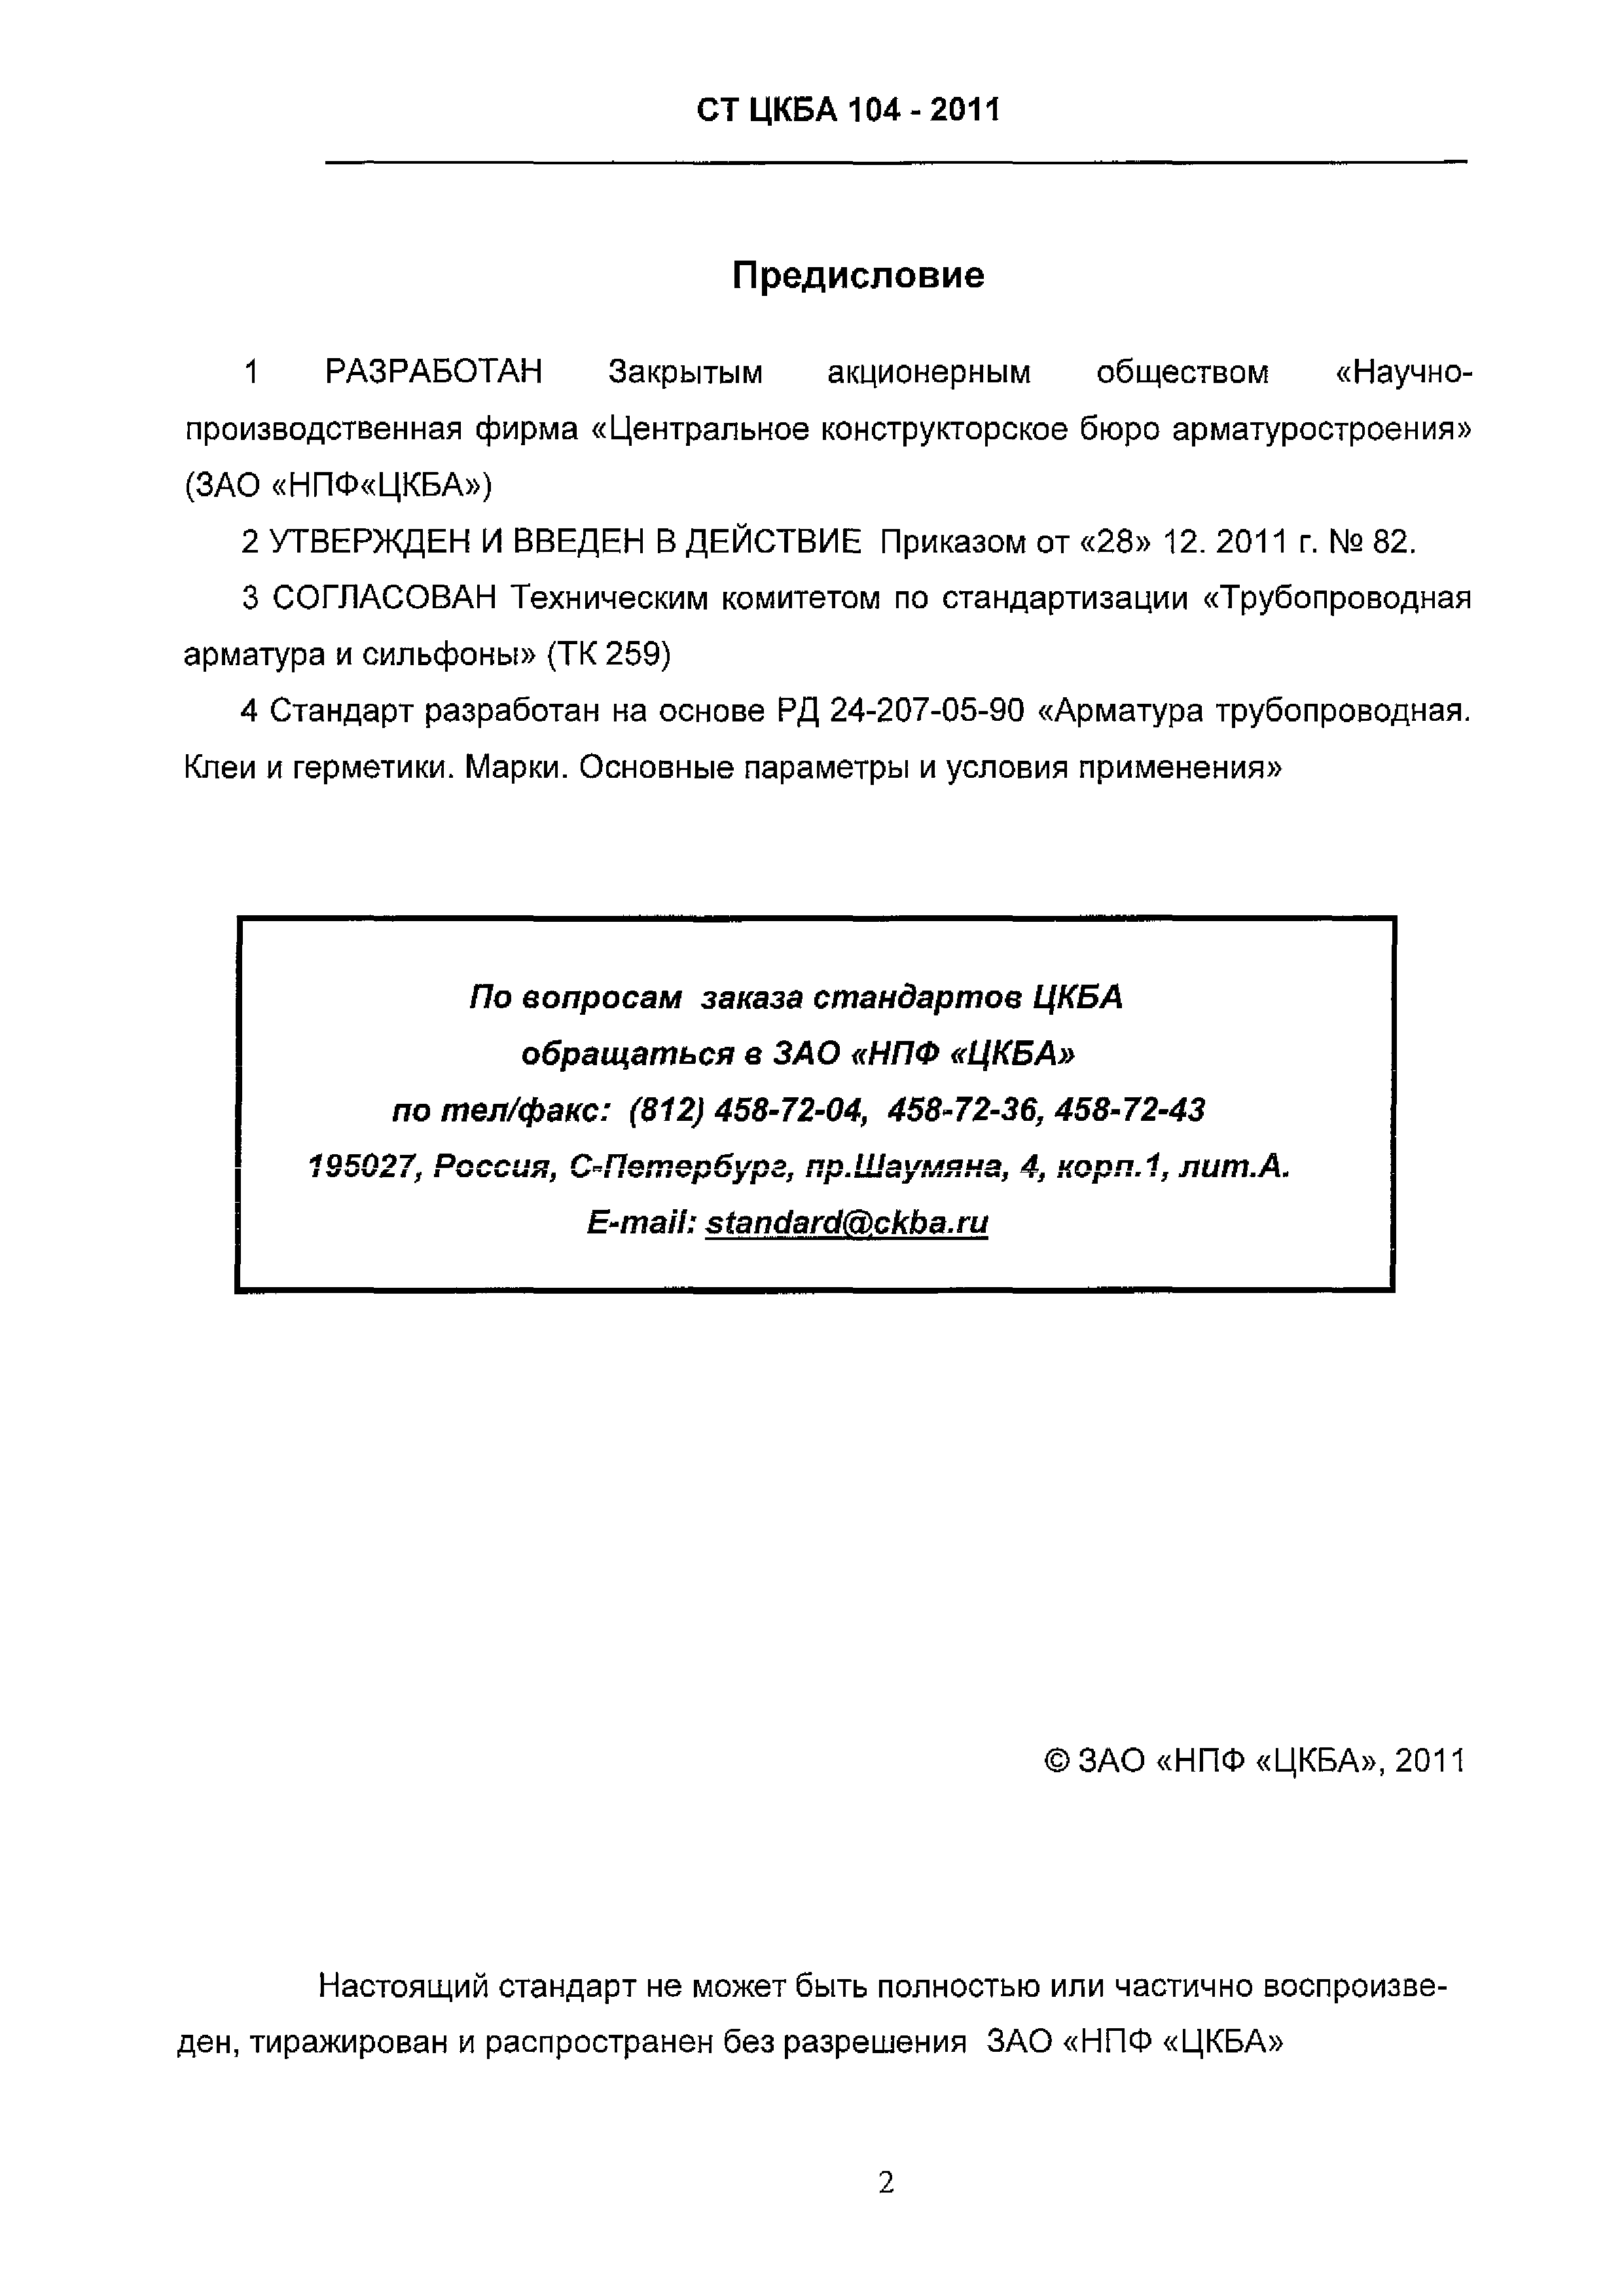 СТ ЦКБА 104-2011